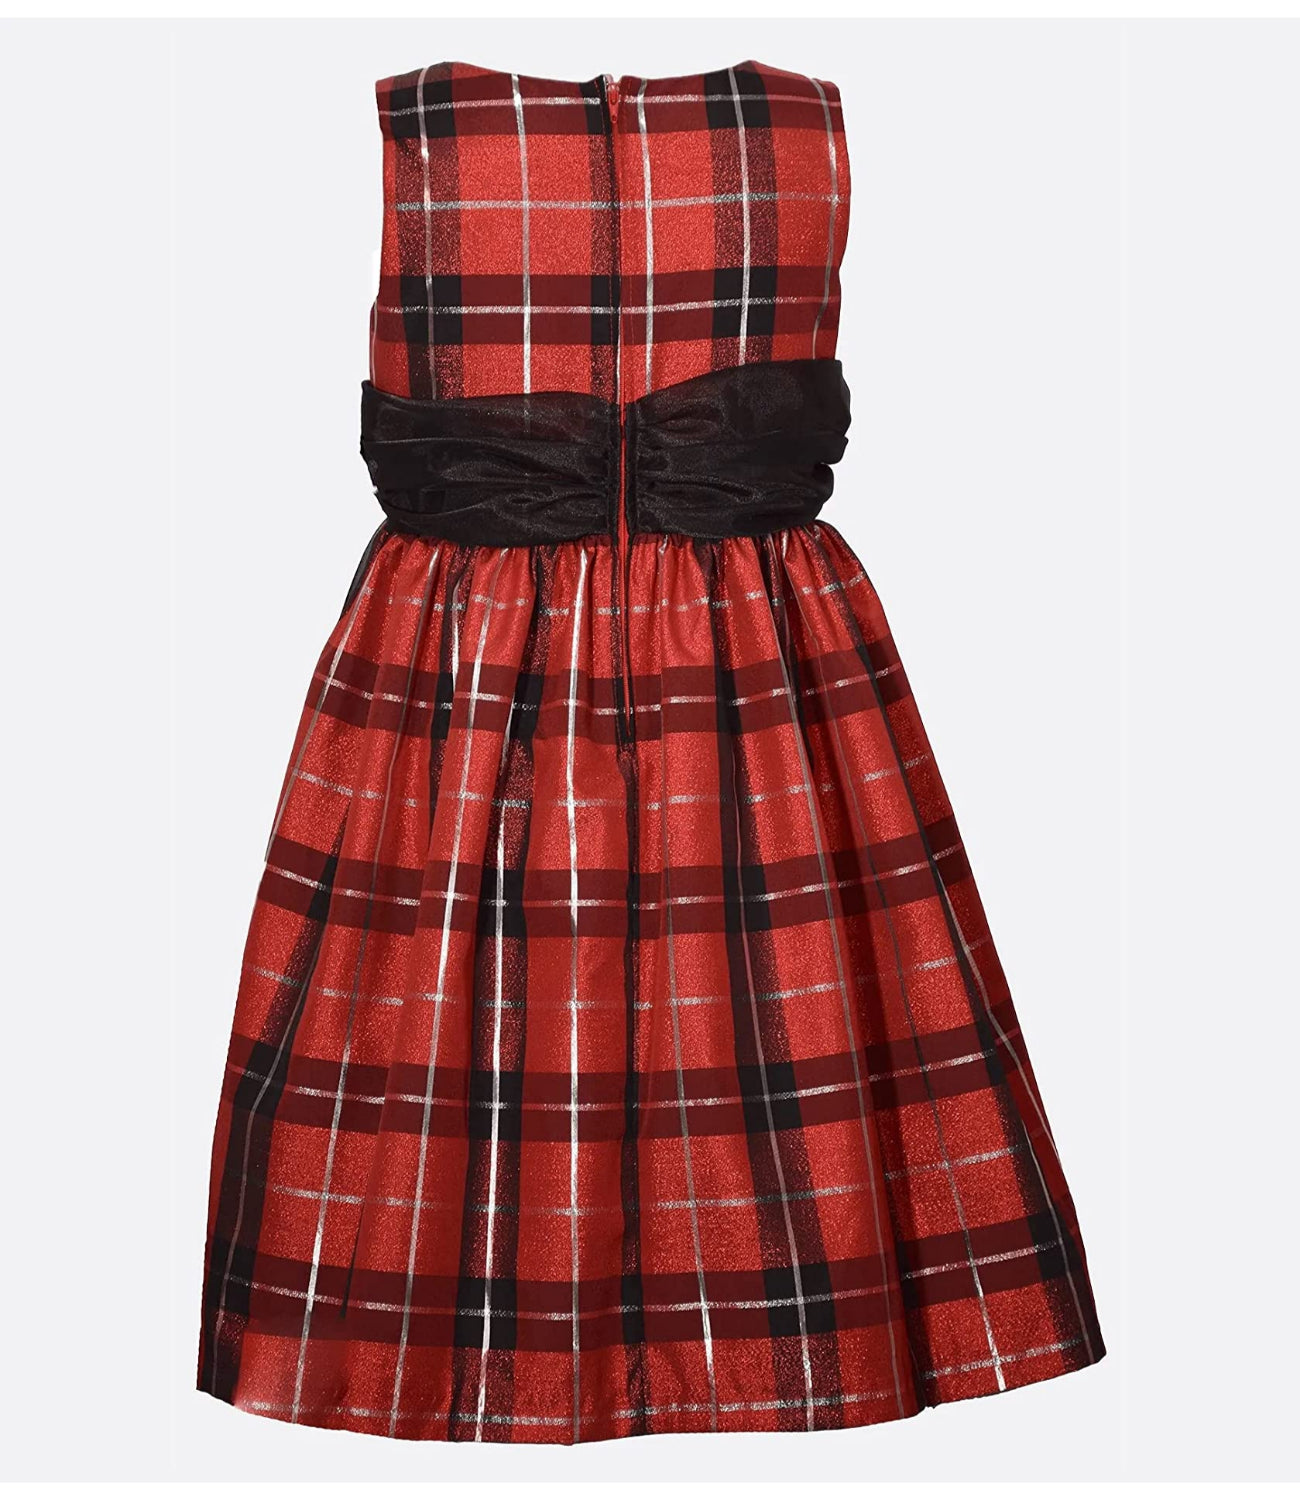 Bonnie Jean Girls 2-6X Red Black Taffeta Plaid Chiffon Bow Holiday Dress